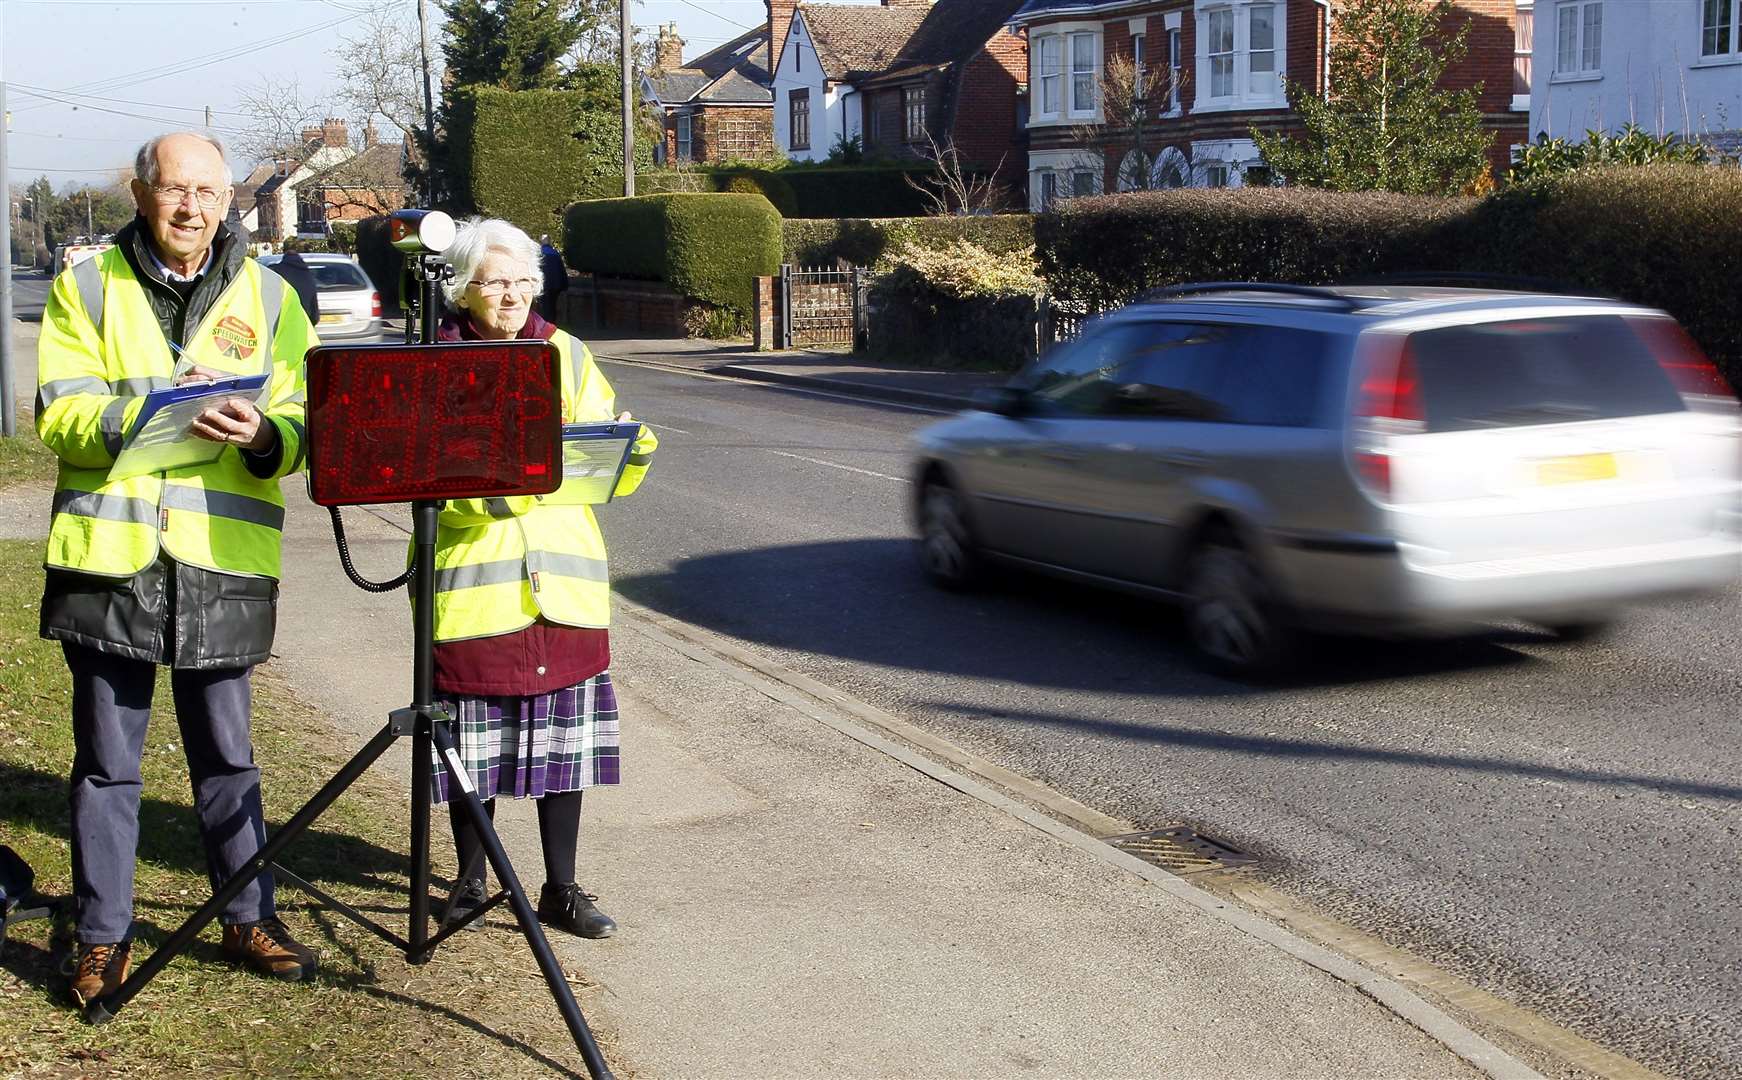 Staplehurst Parish Council recorded 133,000 people speeding in one week